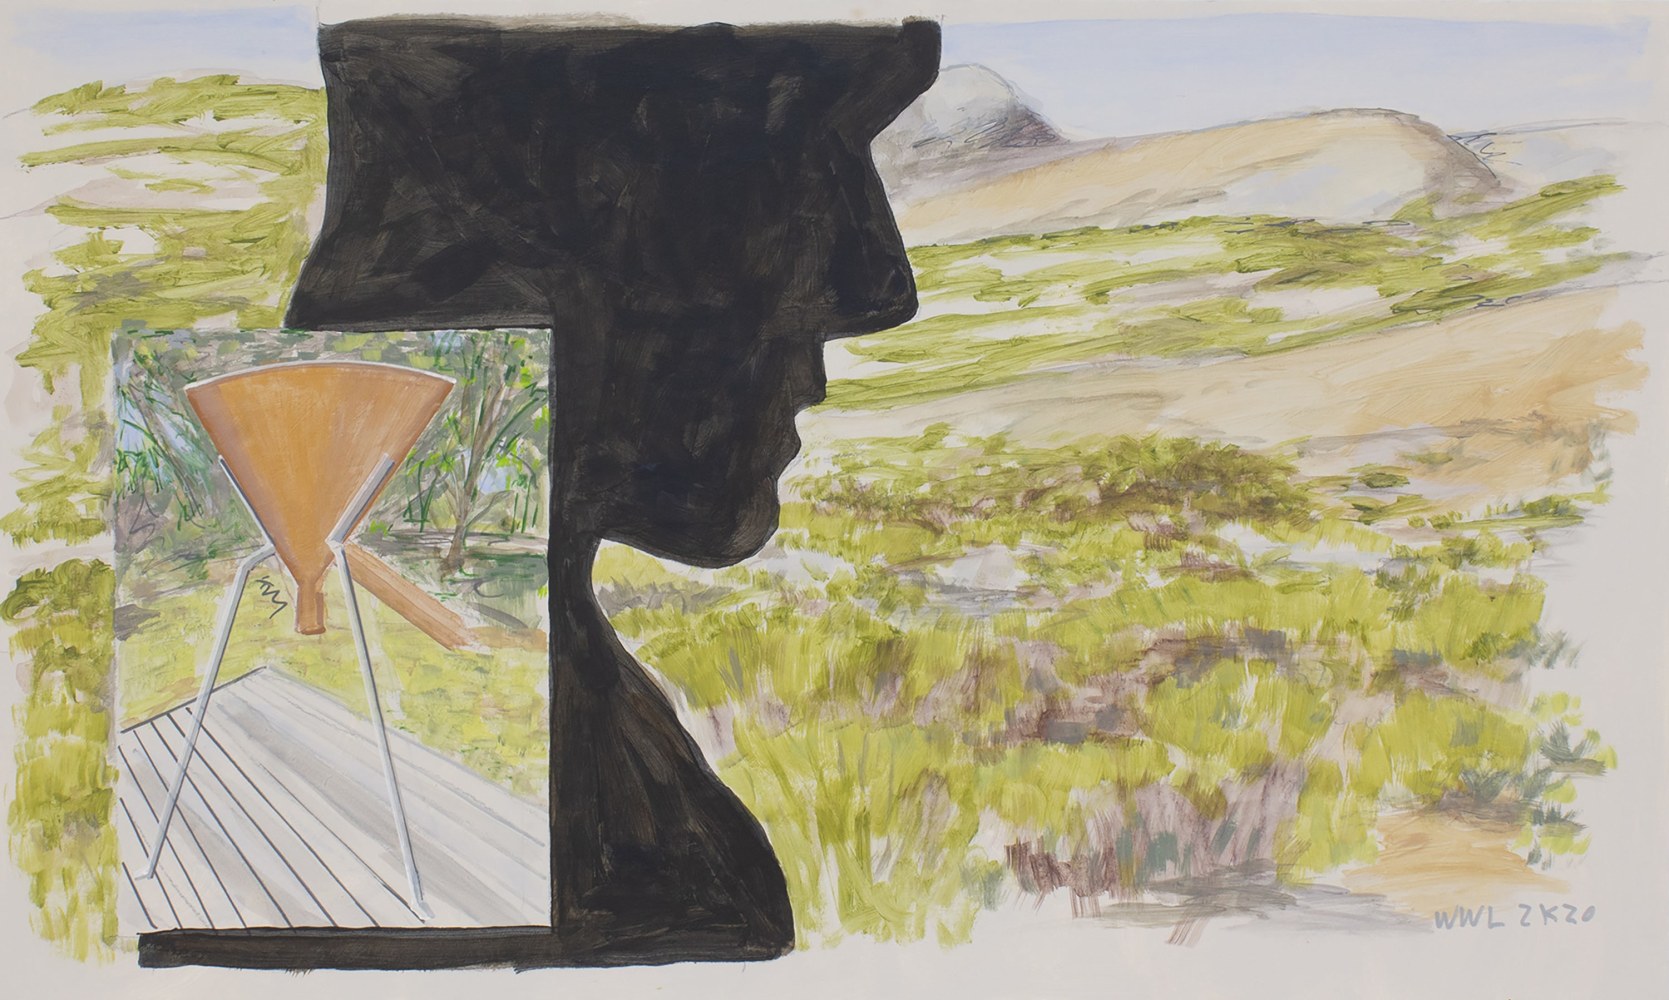 William Leavitt, Copper still, silhouette, 2020